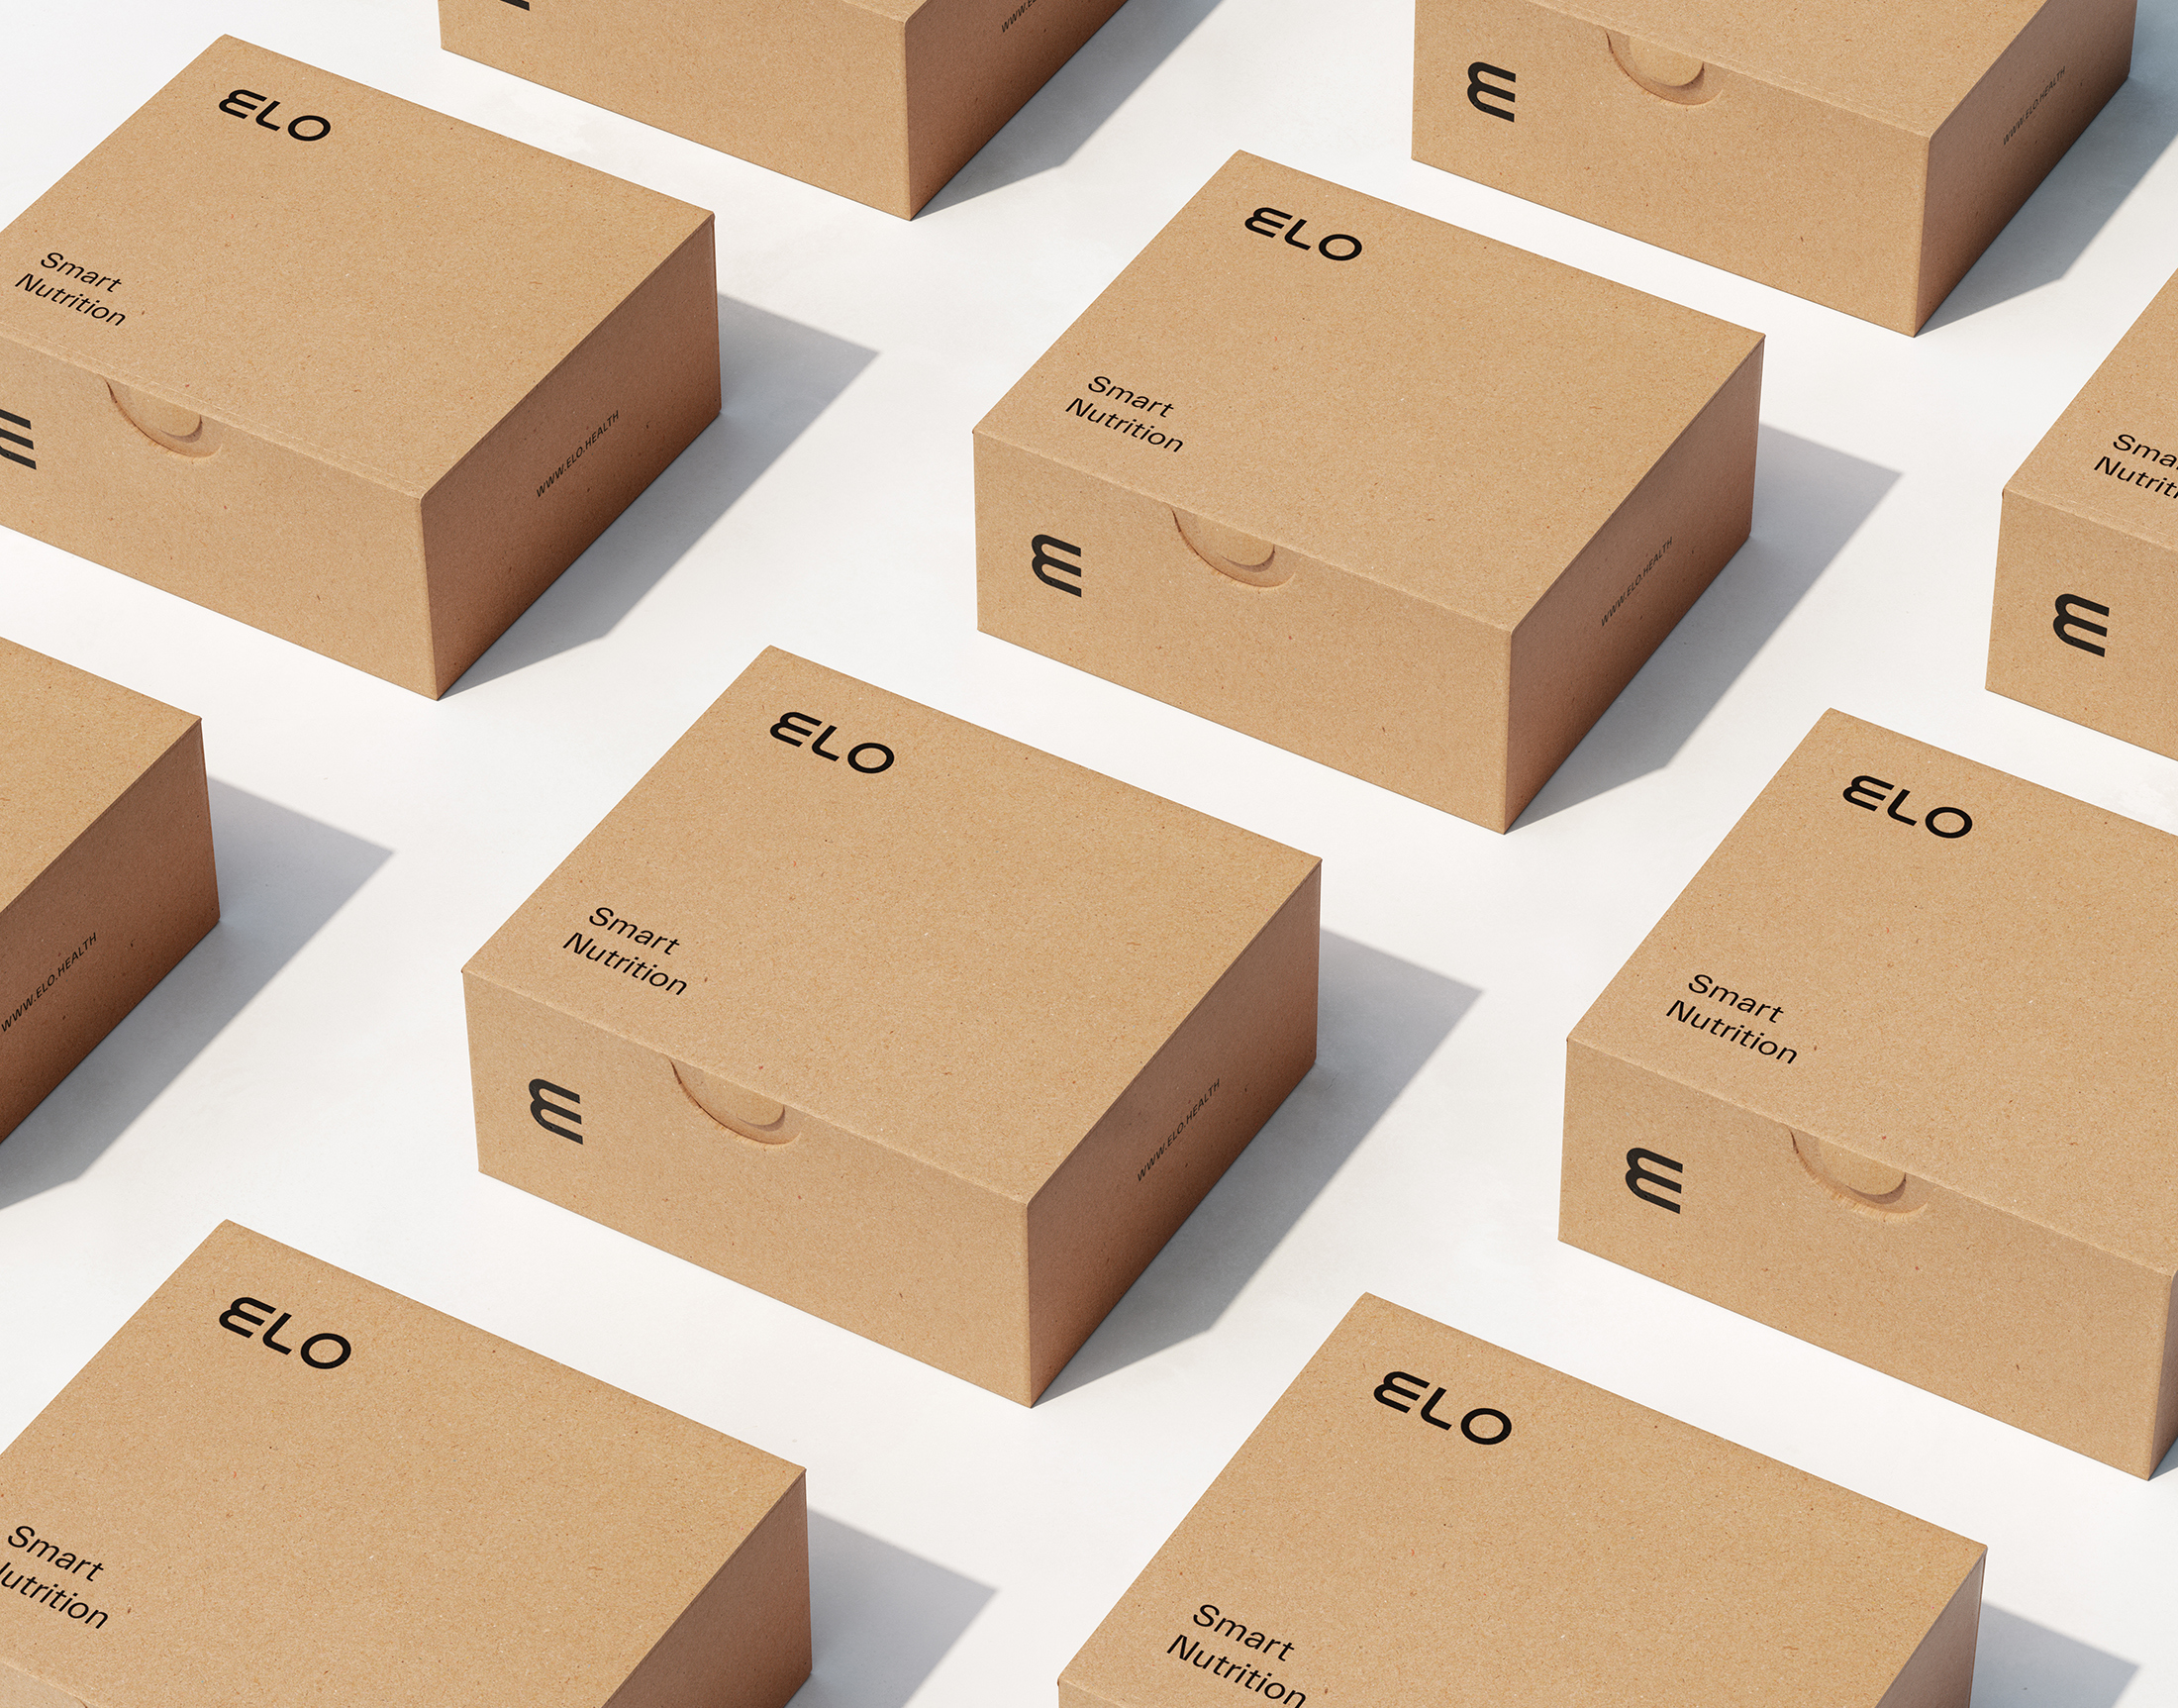 Elo Smart Supplements shipping box array